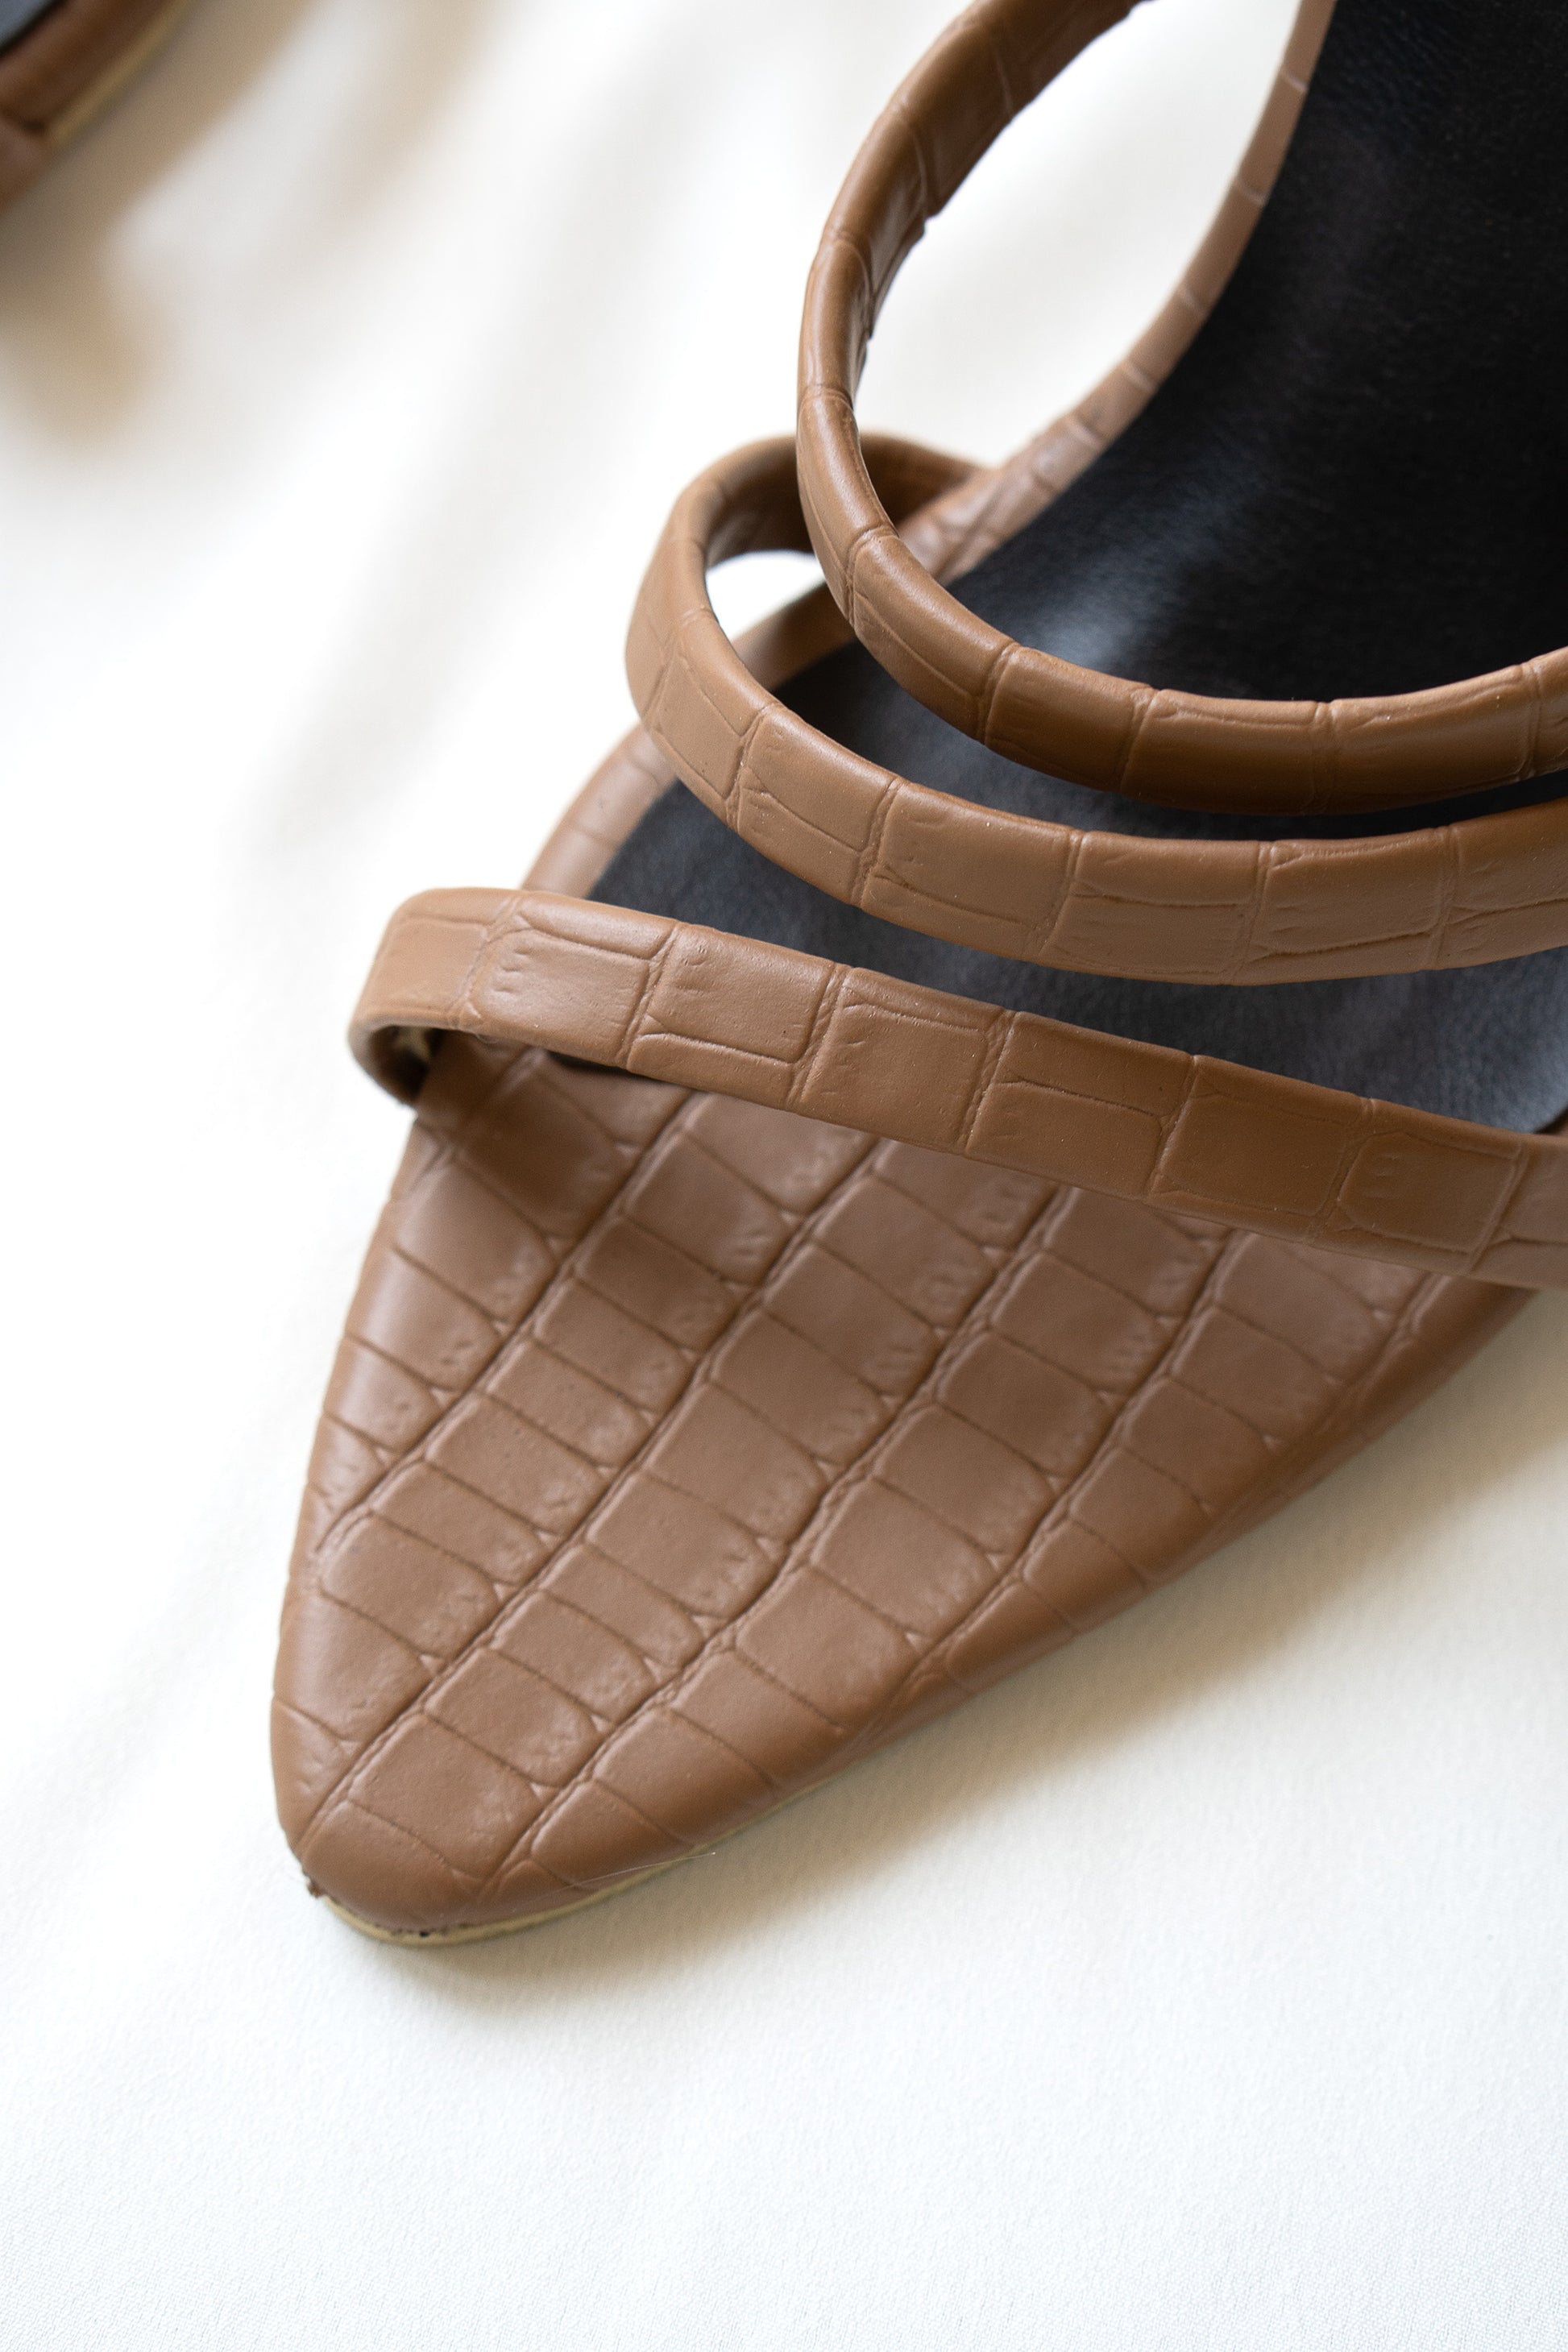 Chic Tan crocodile-print heel with a sleek 3-inch transparent heel